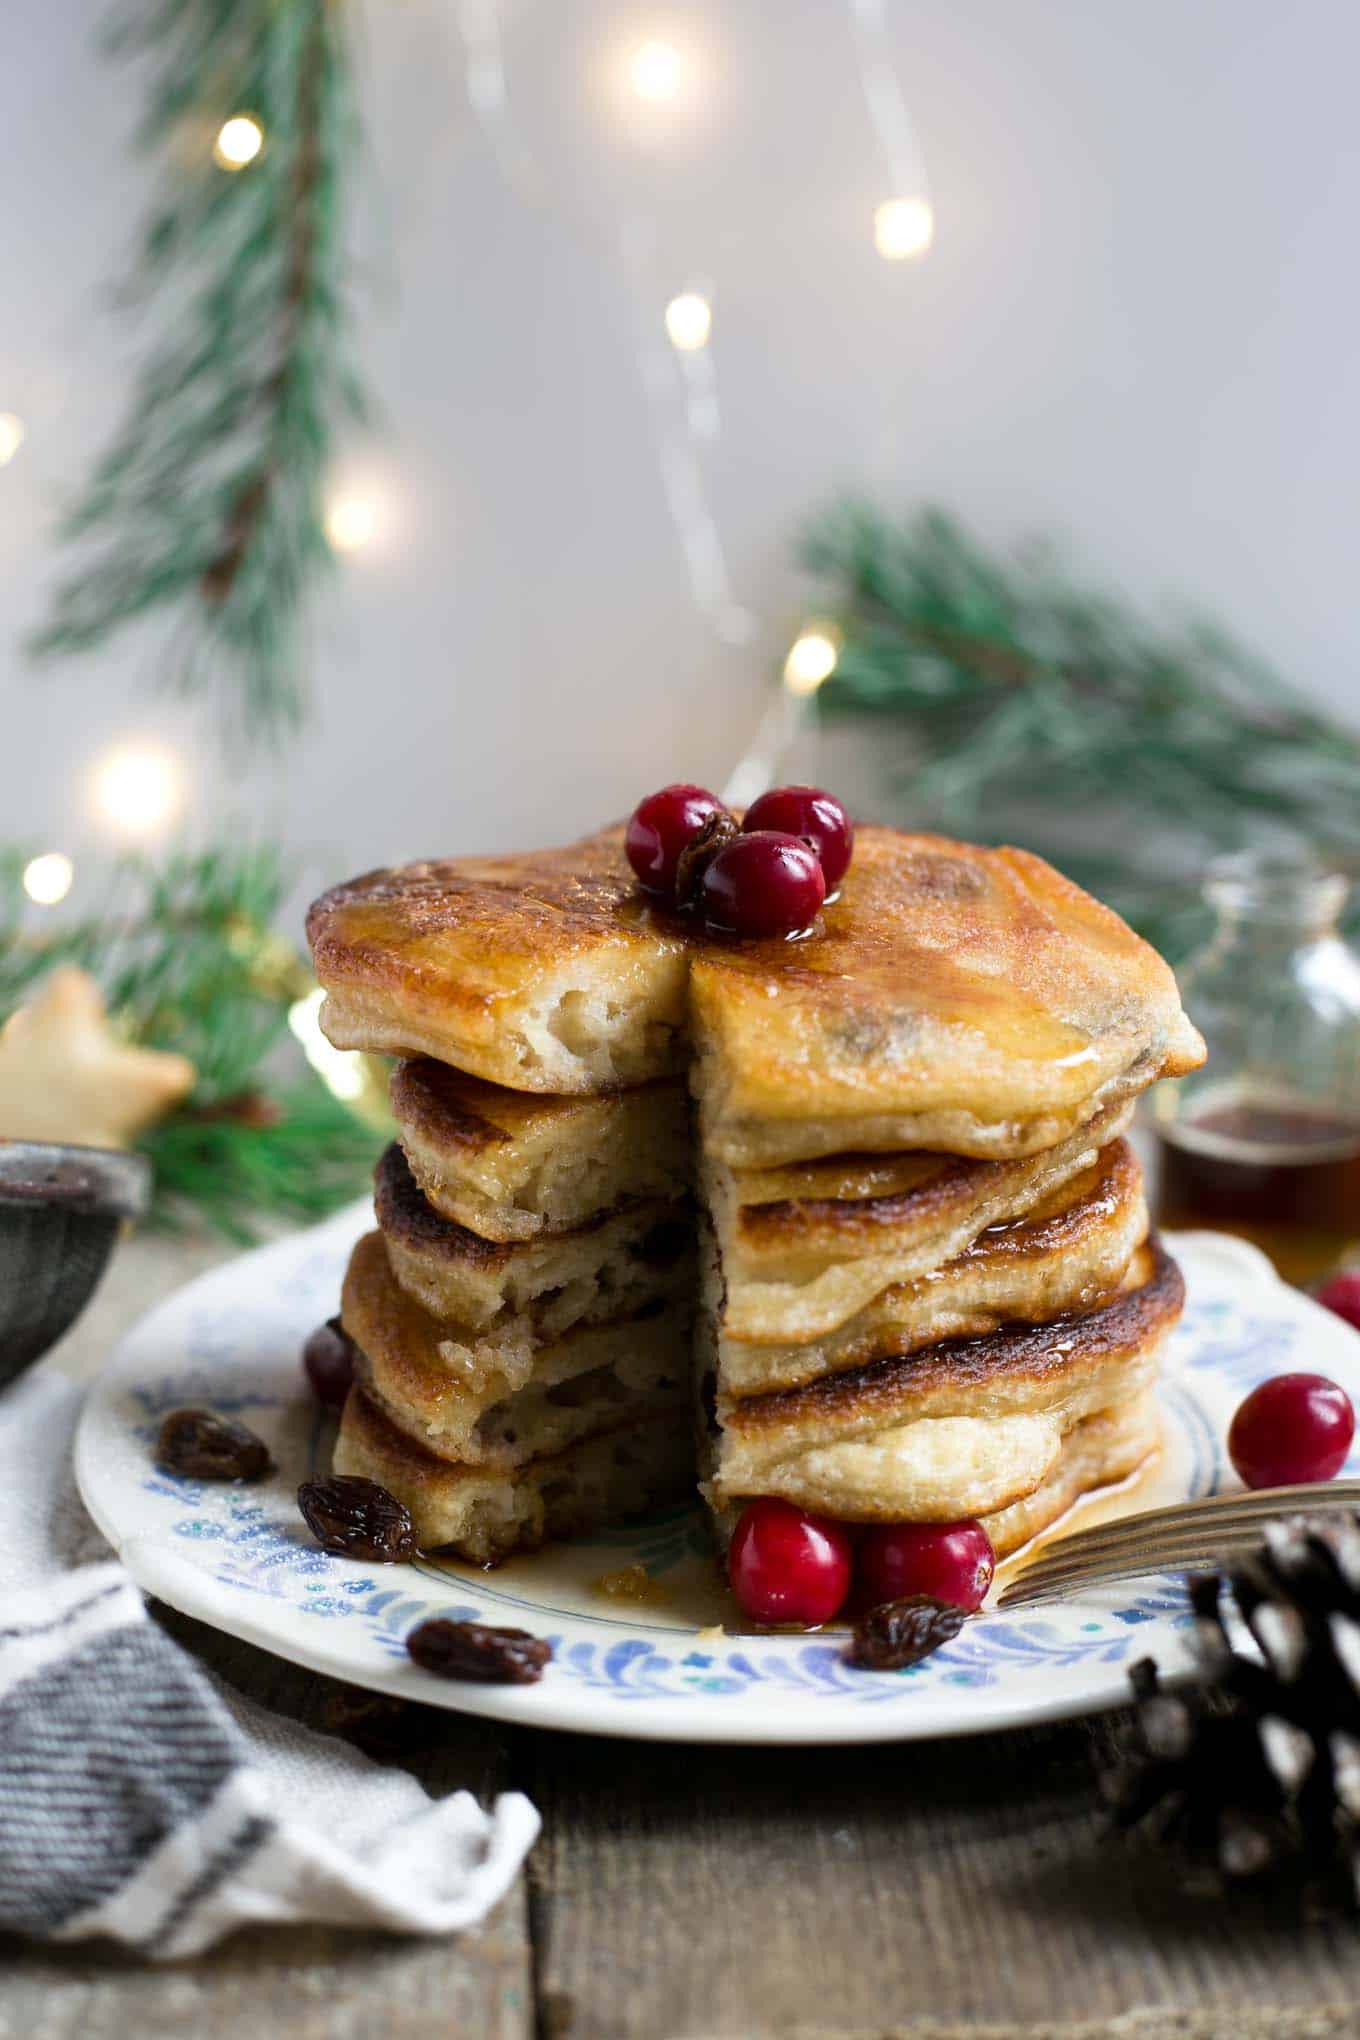 Rum & raisin pancakes, super fluffy and soft, perfect for #Christmas breakfast! #vegan #dairyfree #pancakes | via @annabanana.co